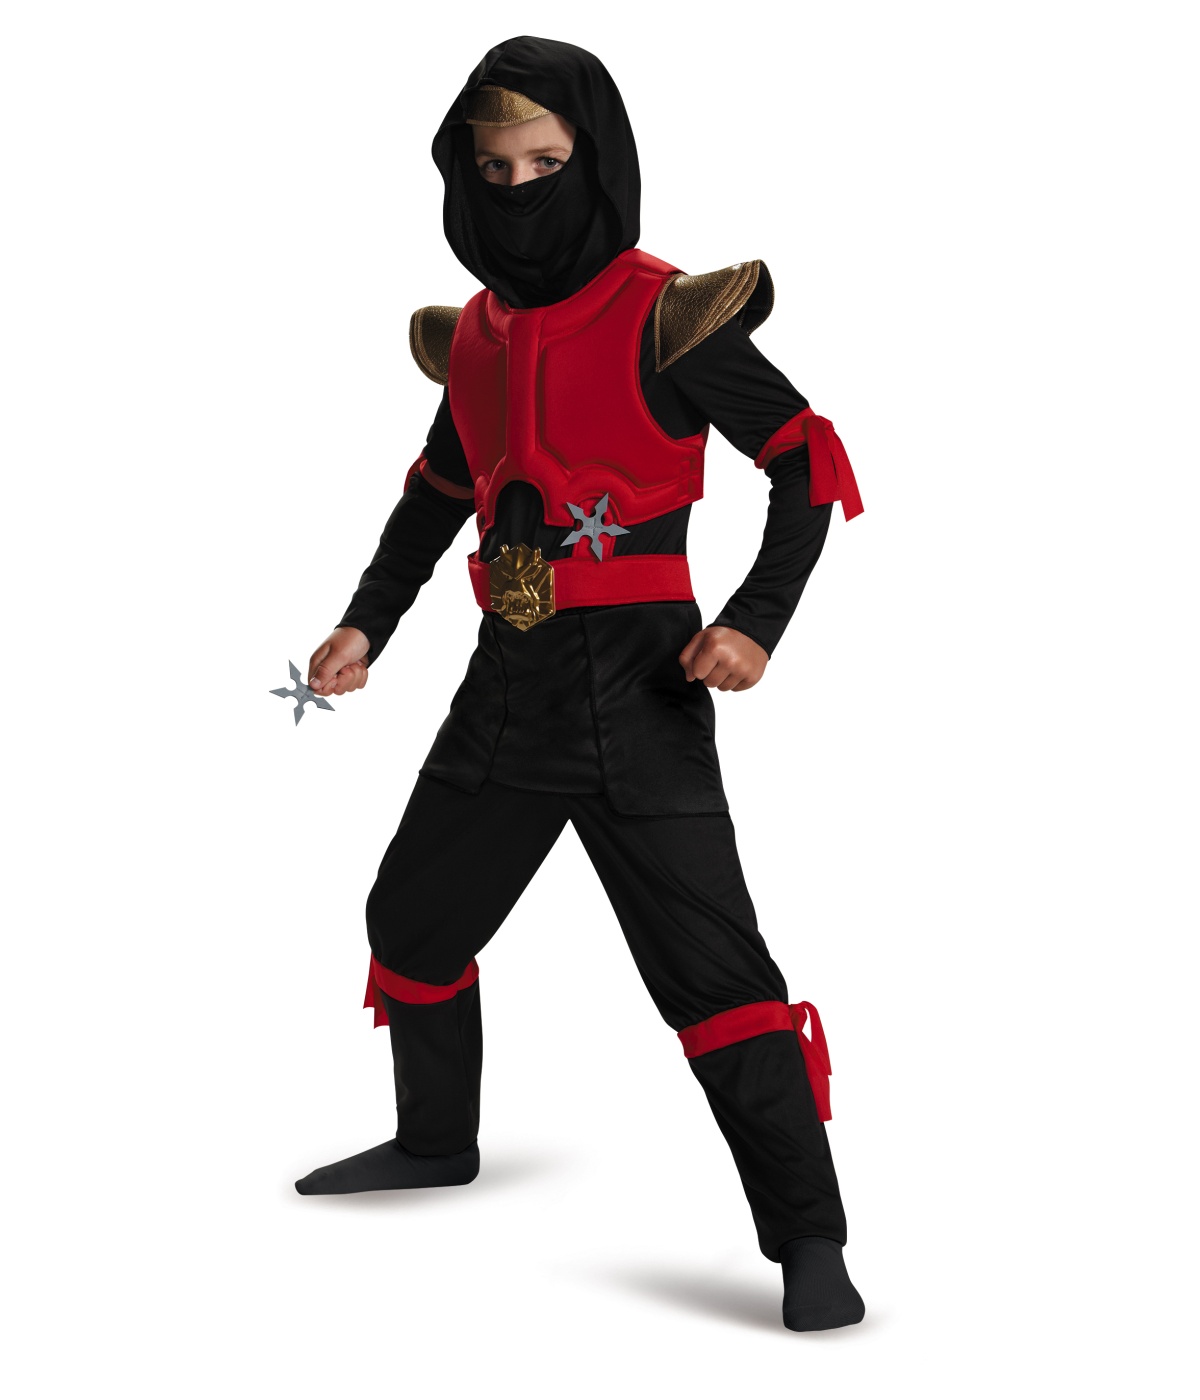  Boys Two Tone Ninja Costume